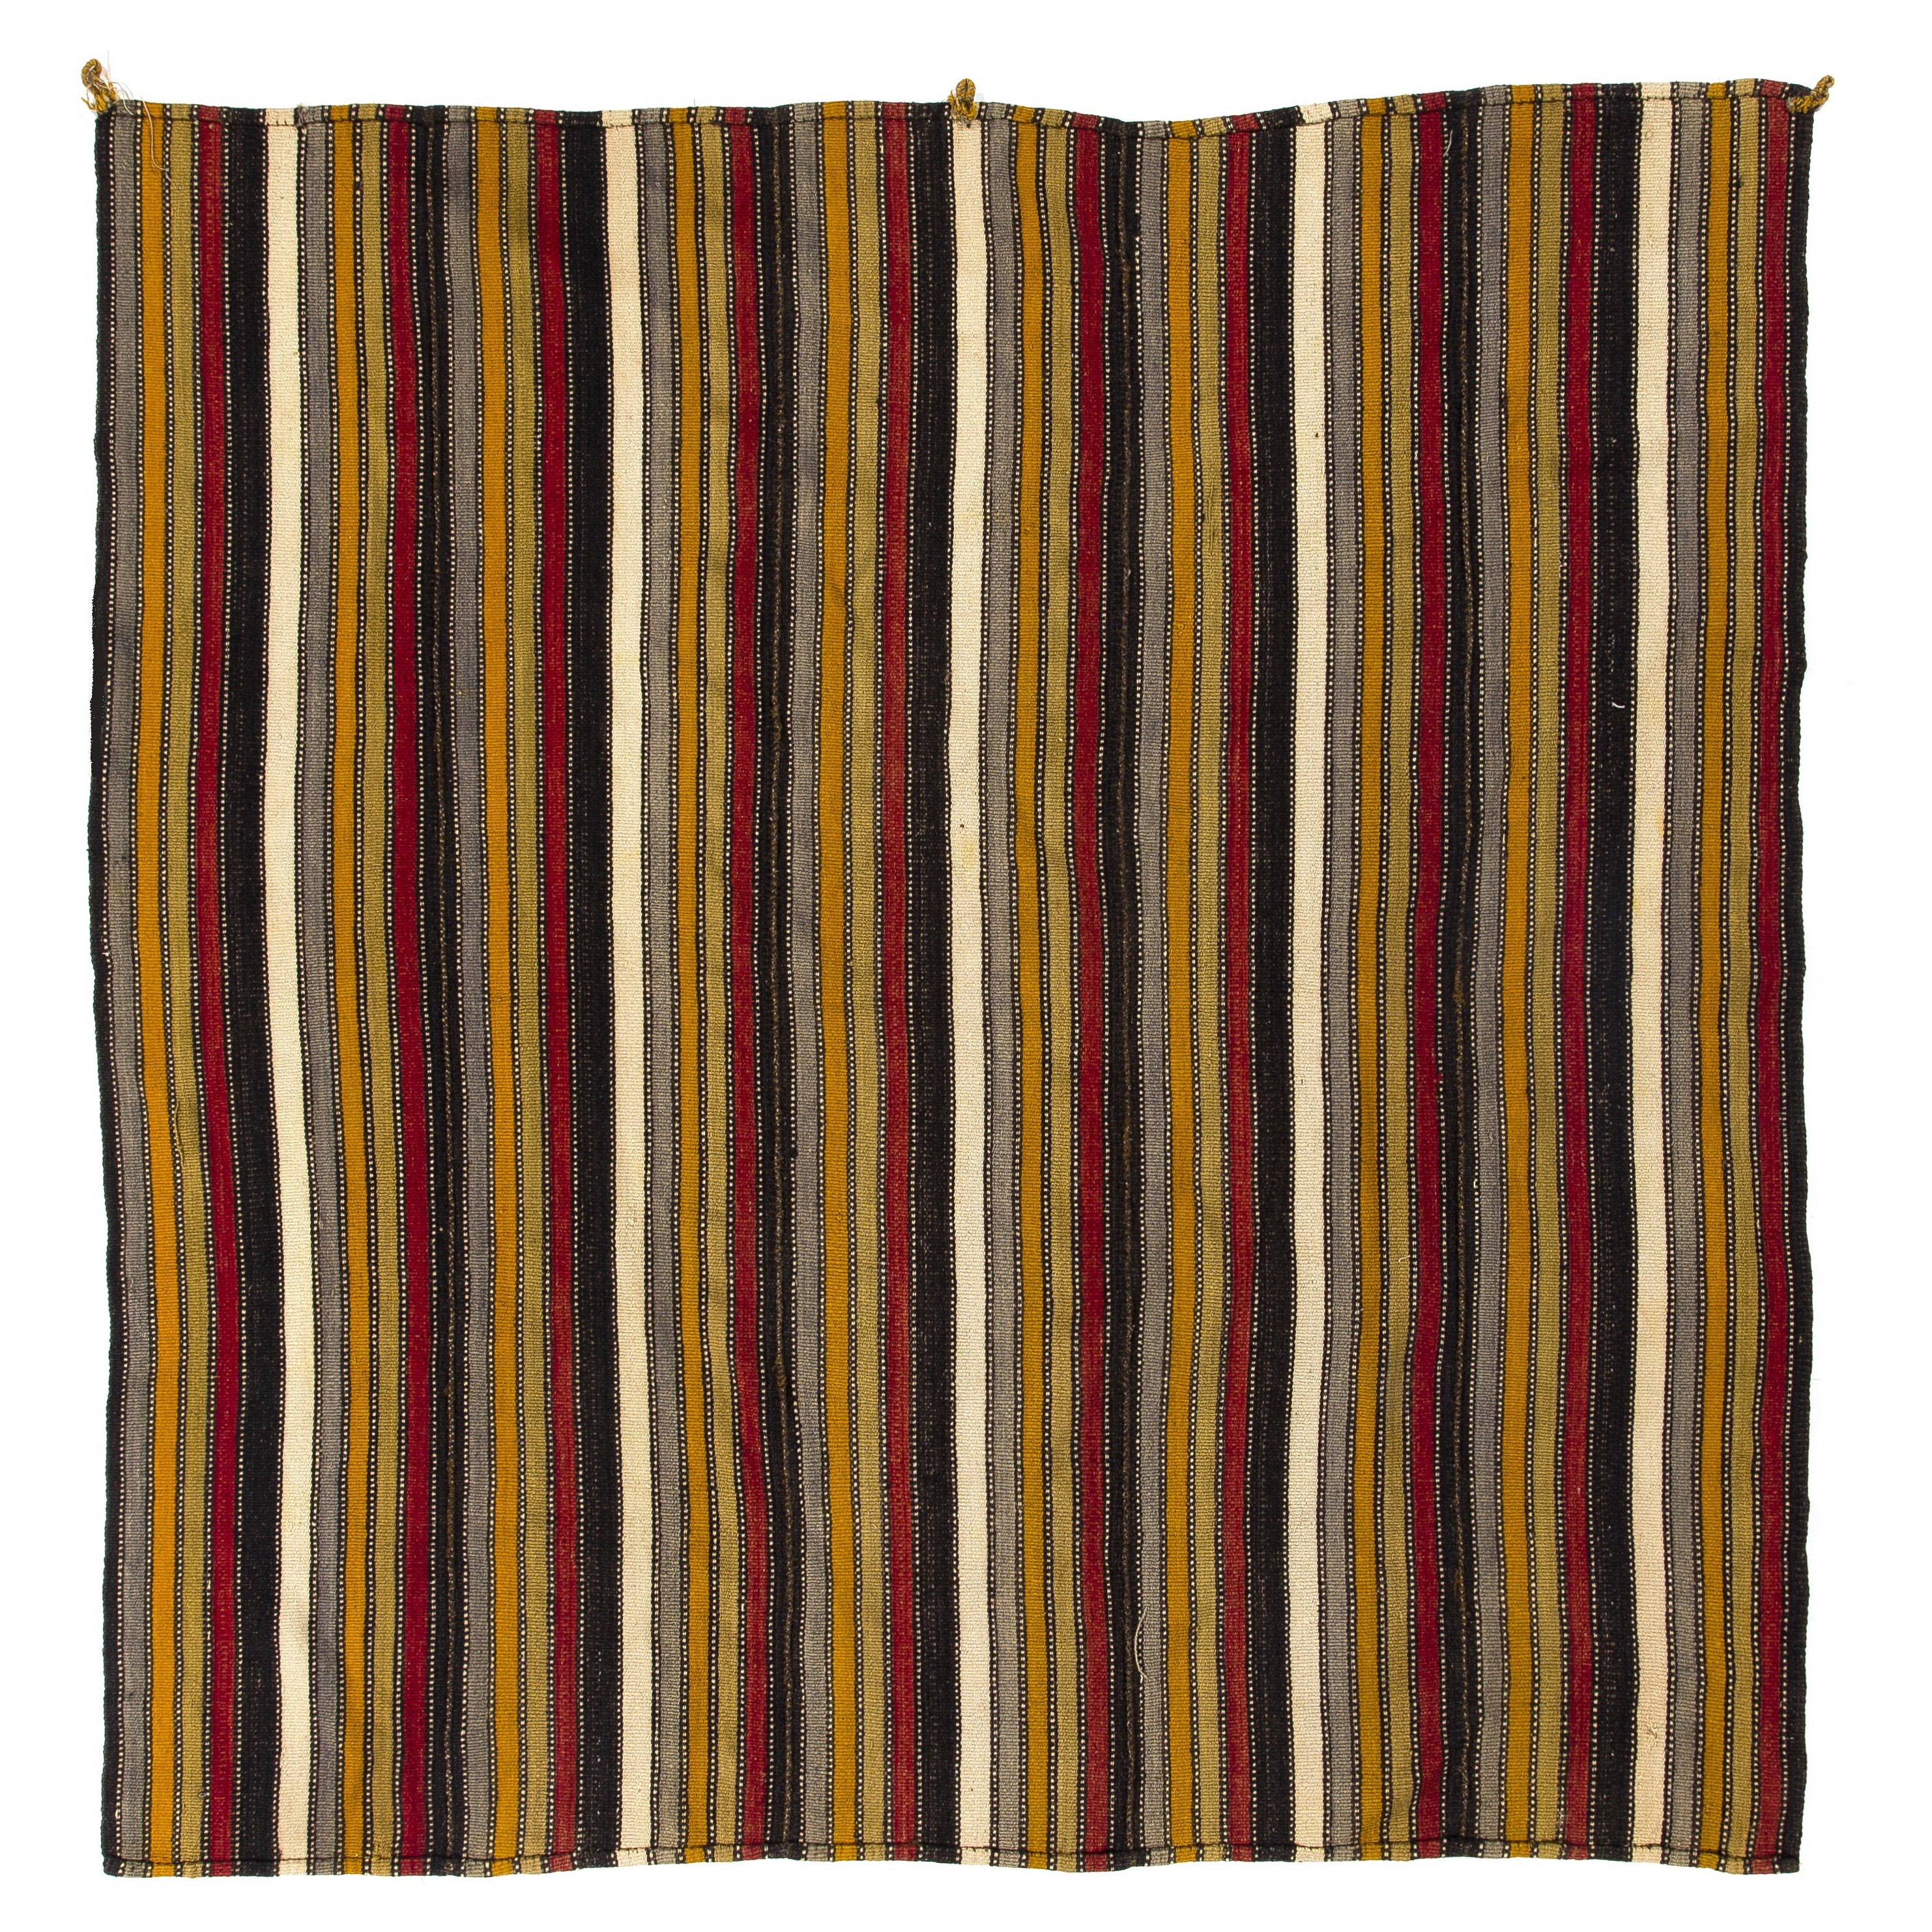 5.7x5.9 ft Handwoven Striped Vintage Kilim Rug, Flat-Weave Wool Floor Covering For Sale